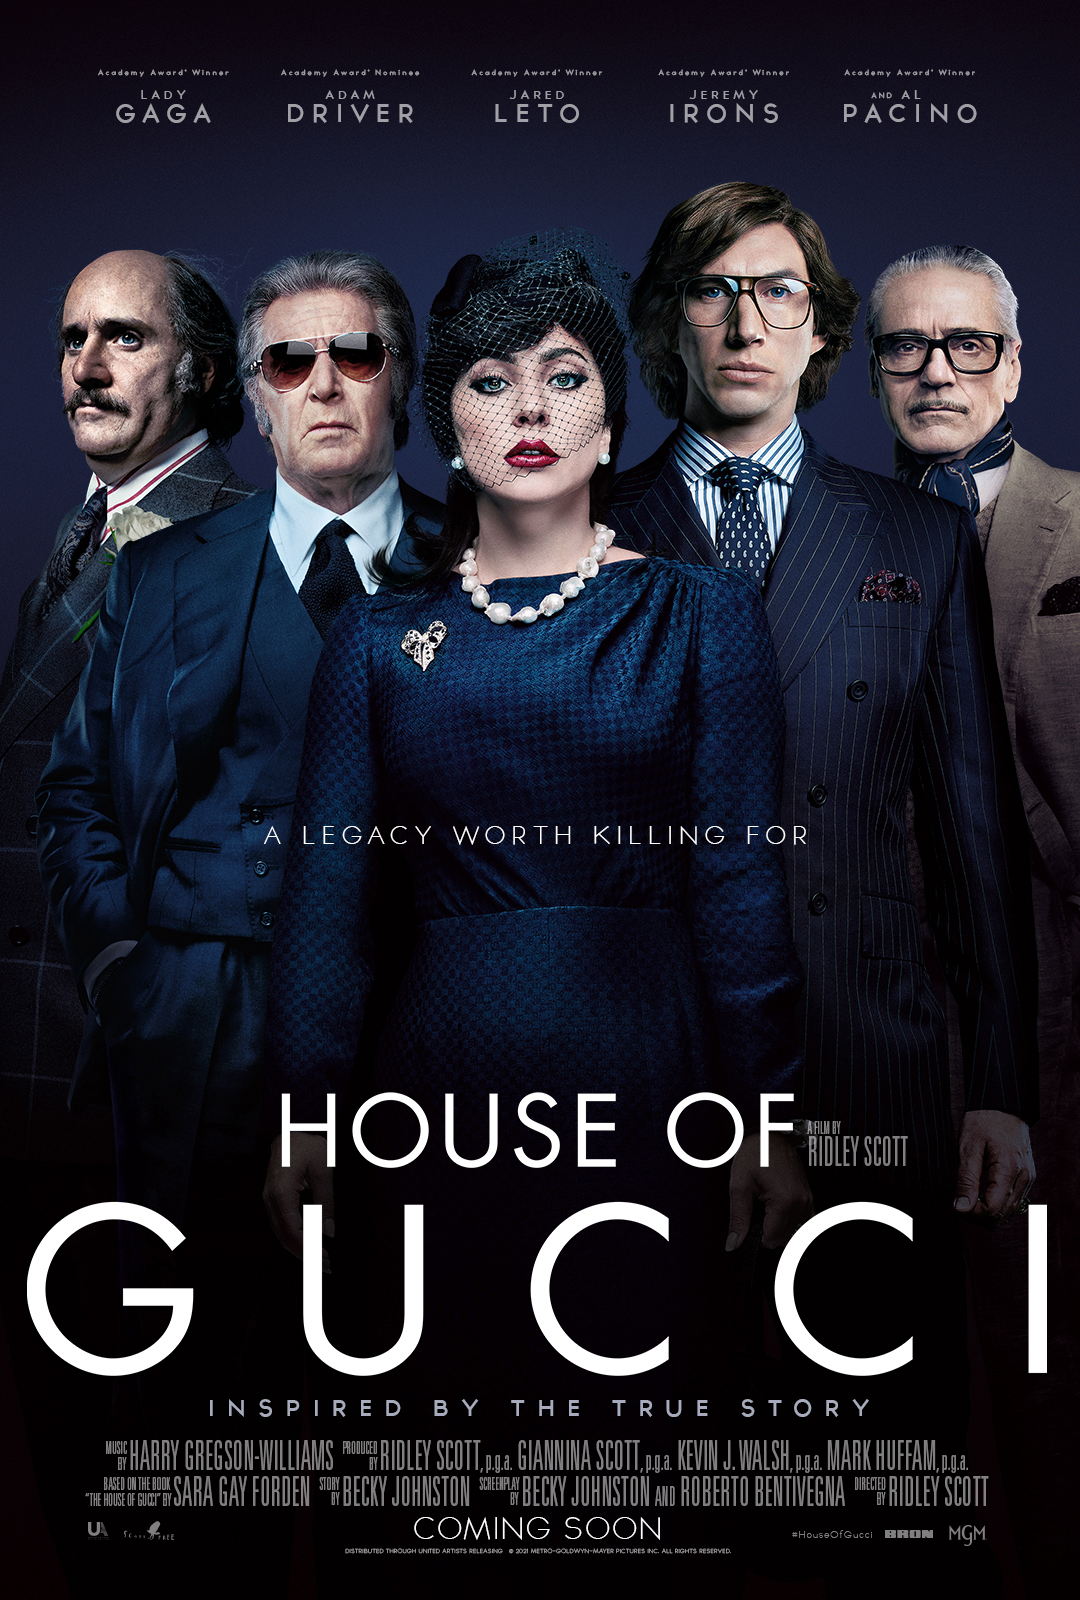 Stiahni si Filmy bez titulků Klan Gucci / House of Gucci (2021)[1080p] Webrip = CSFD 75%